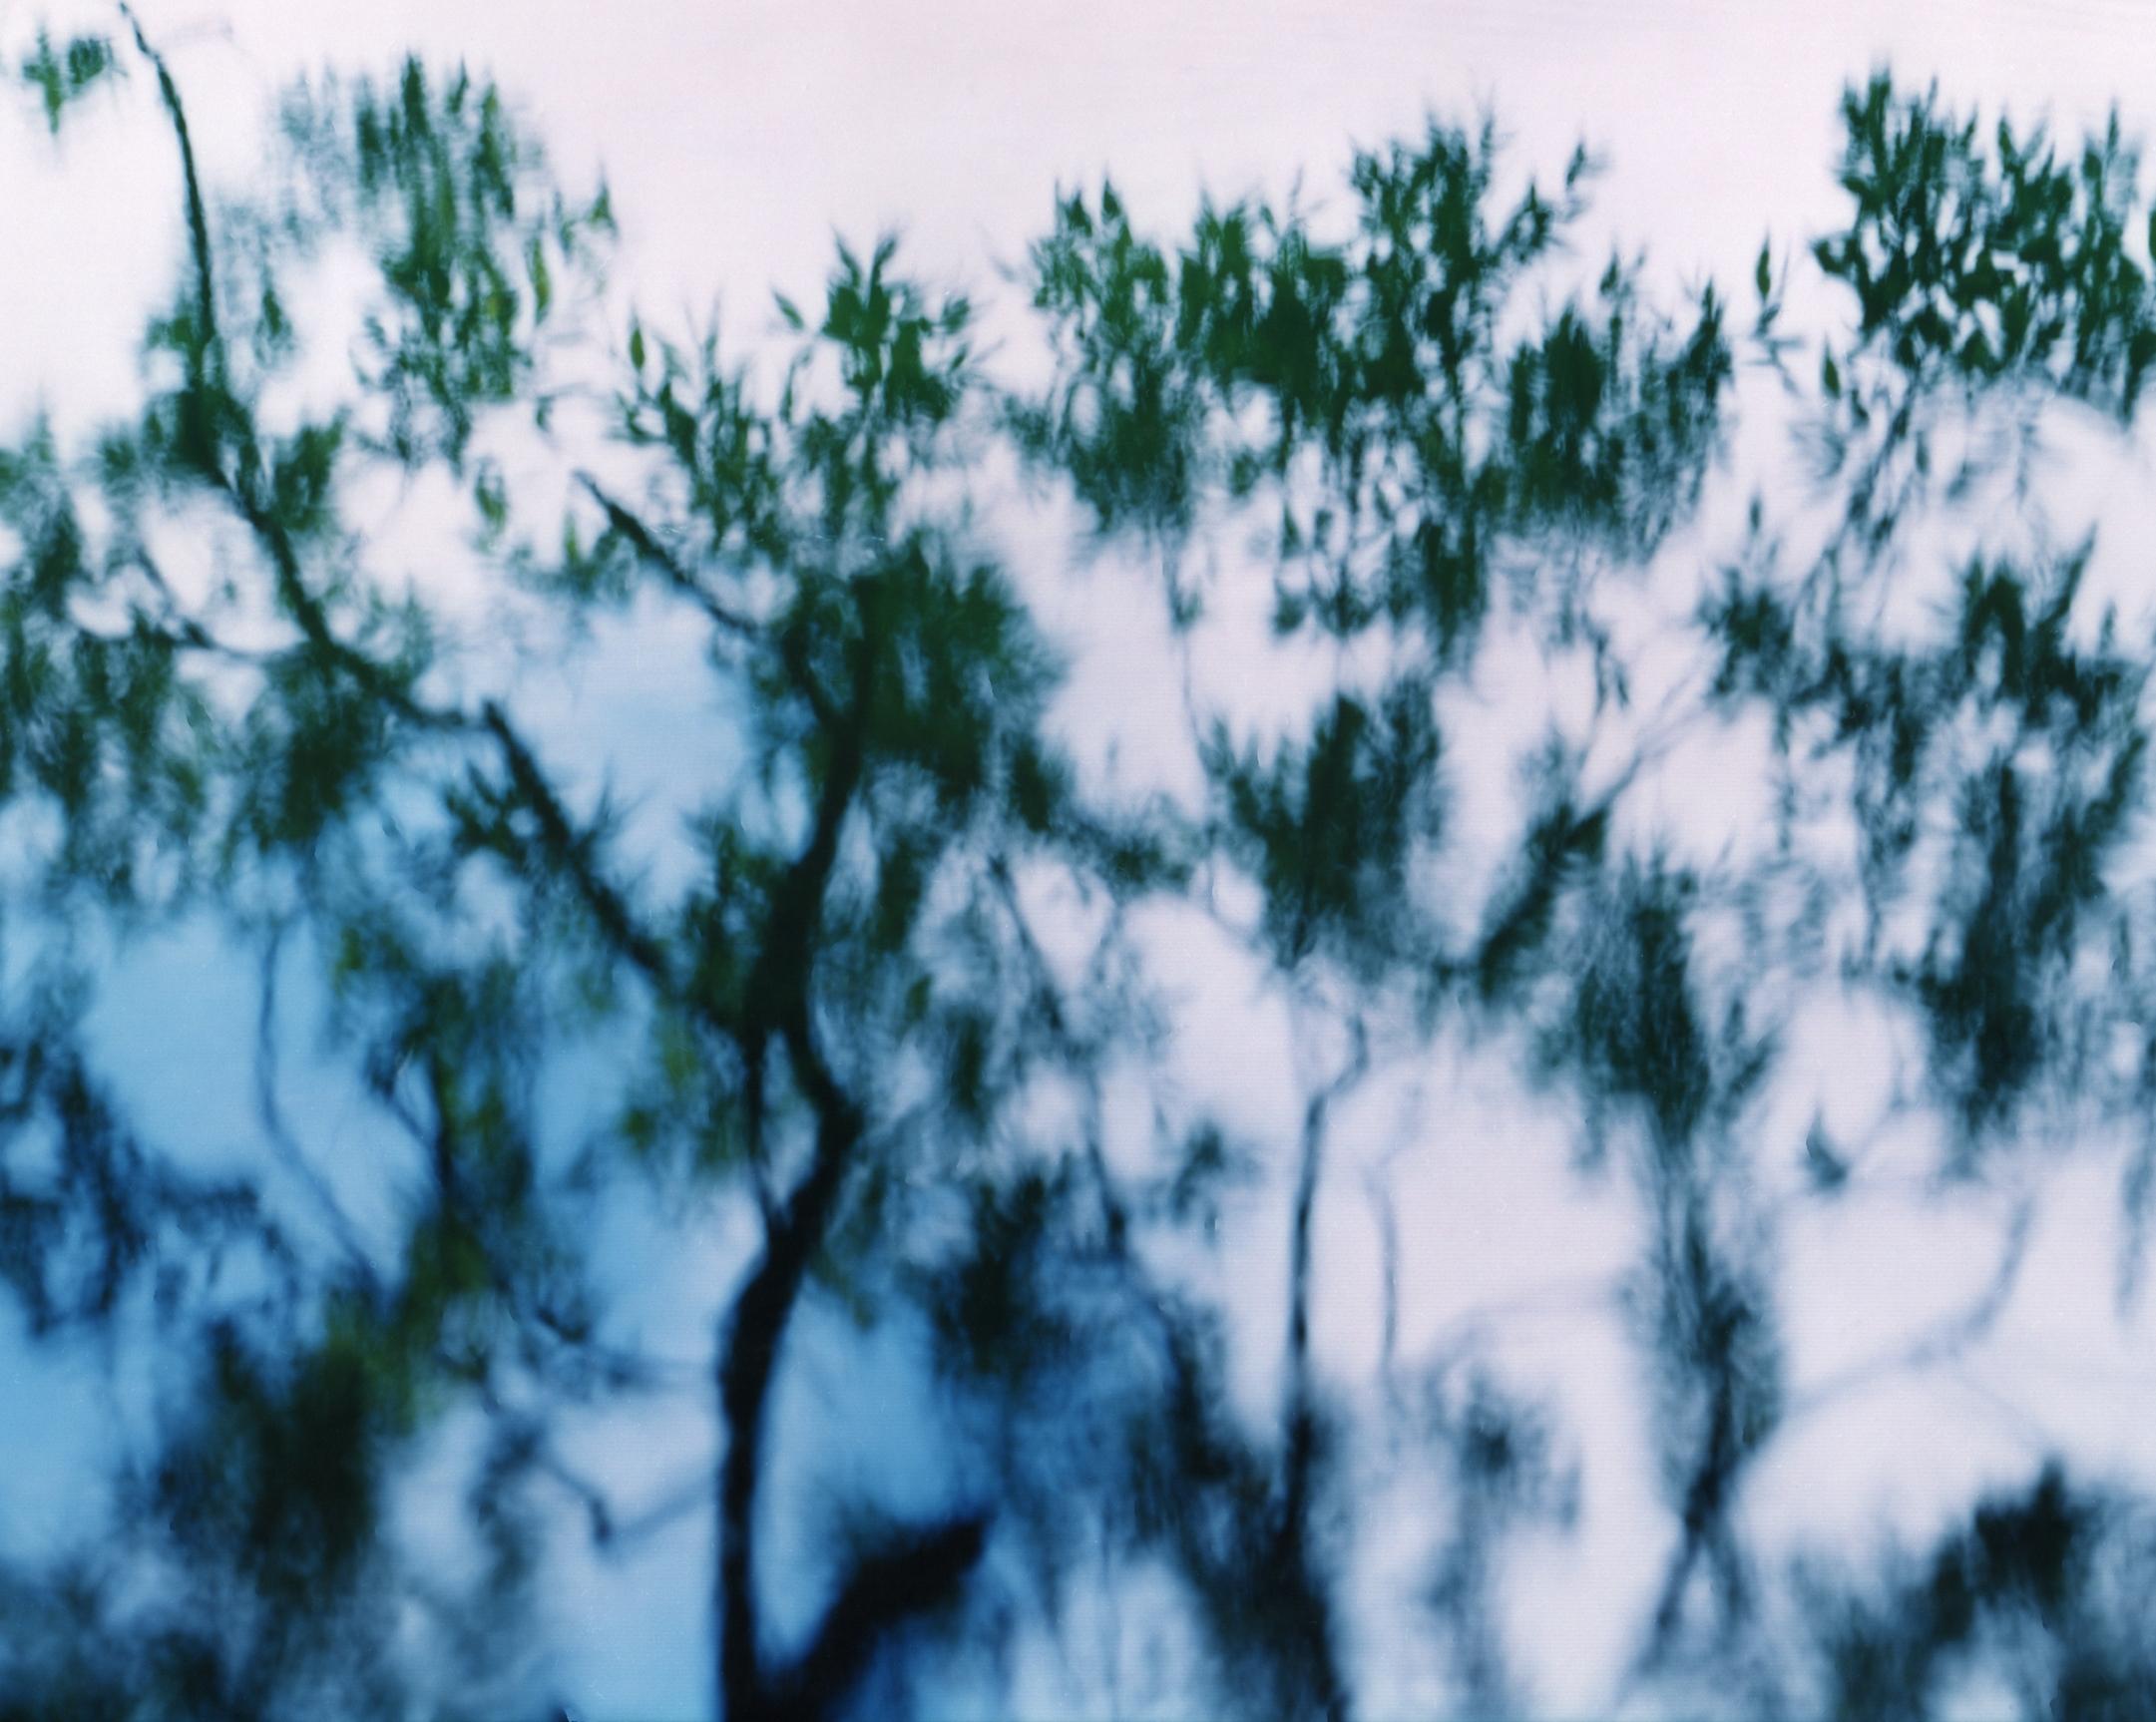 Water Mirror 17, WM-758 – Risaku Suzuki, Nature, Tree, Japanese, Reflection 2